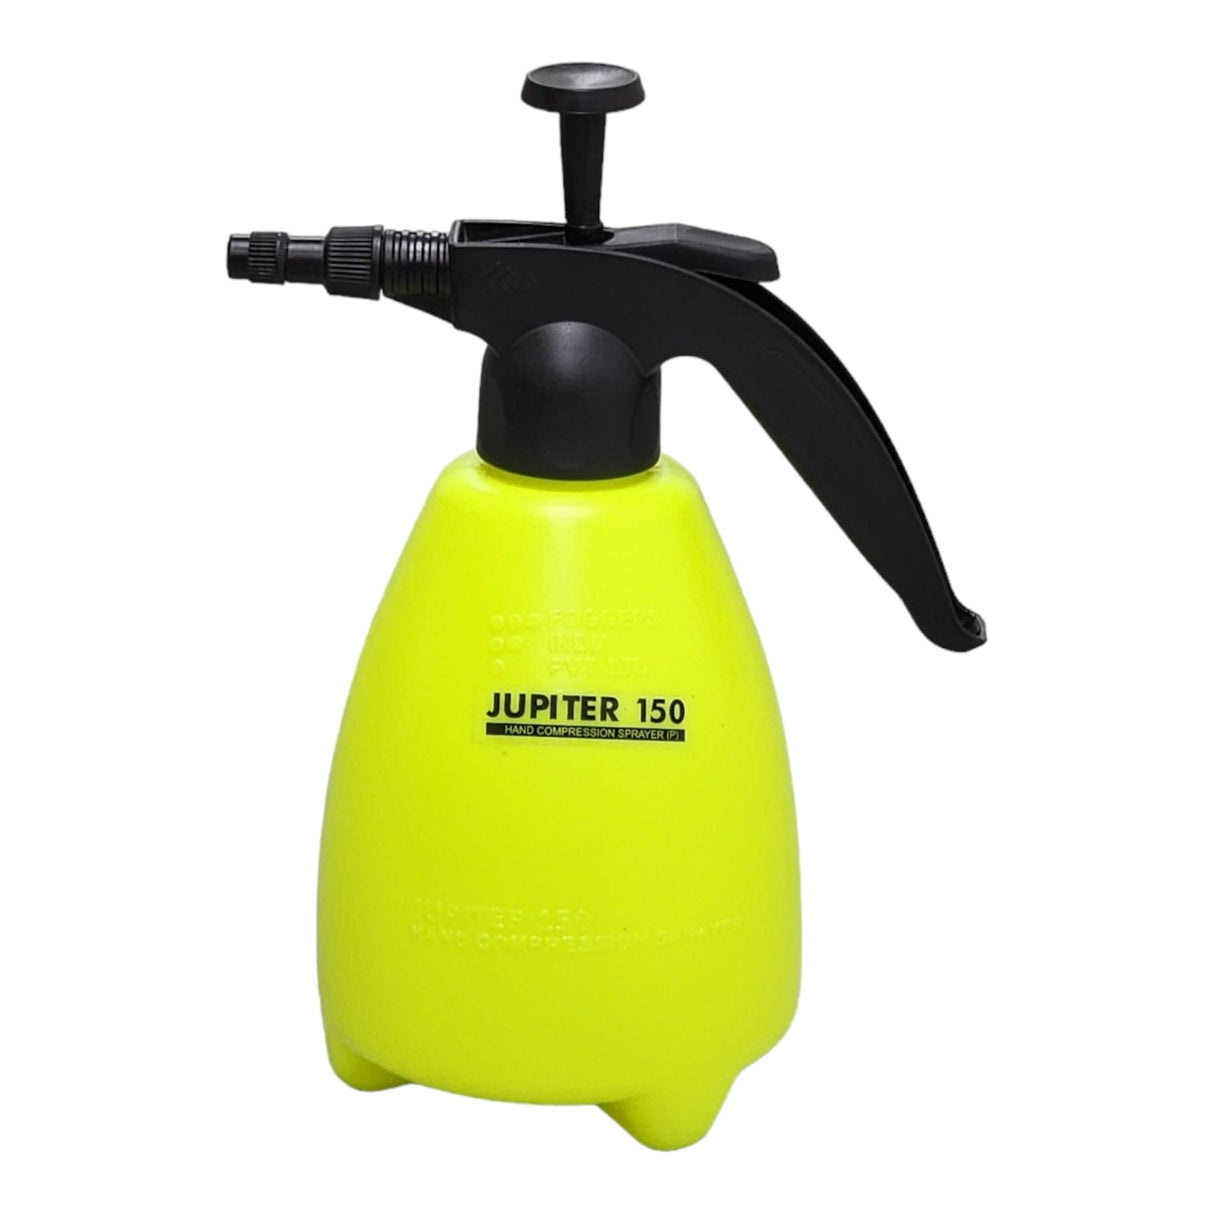 1.5 L Heavy Duty Manual Sprayer, Home & Garden Sprayer